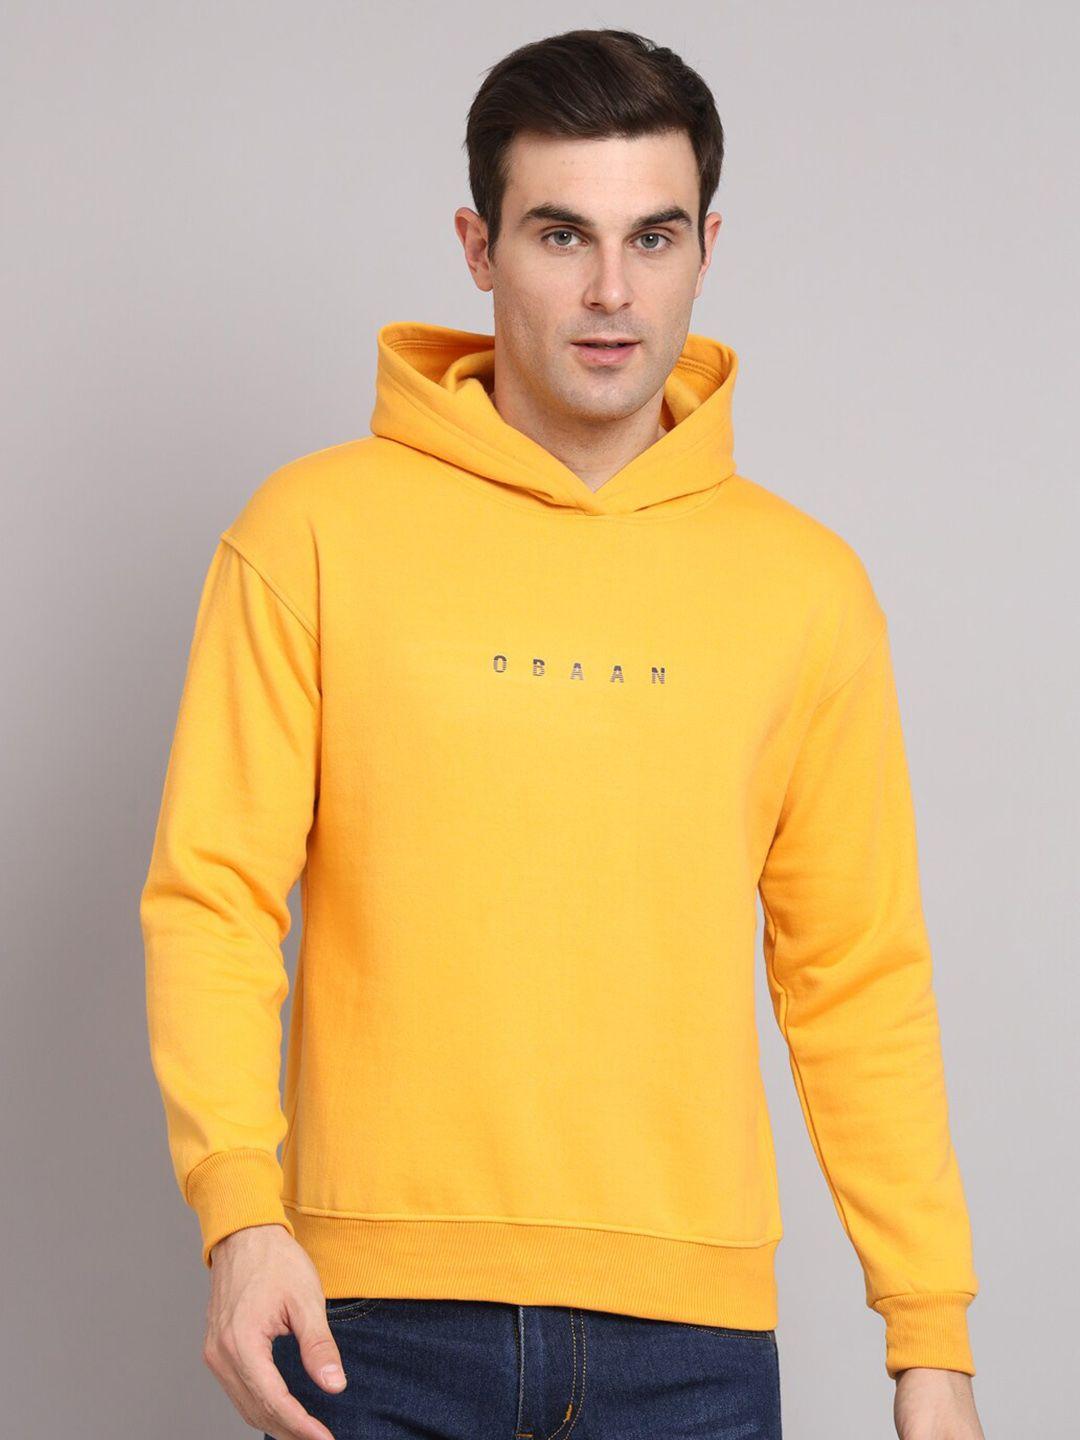 obaan hooded pullover cotton sweatshirt